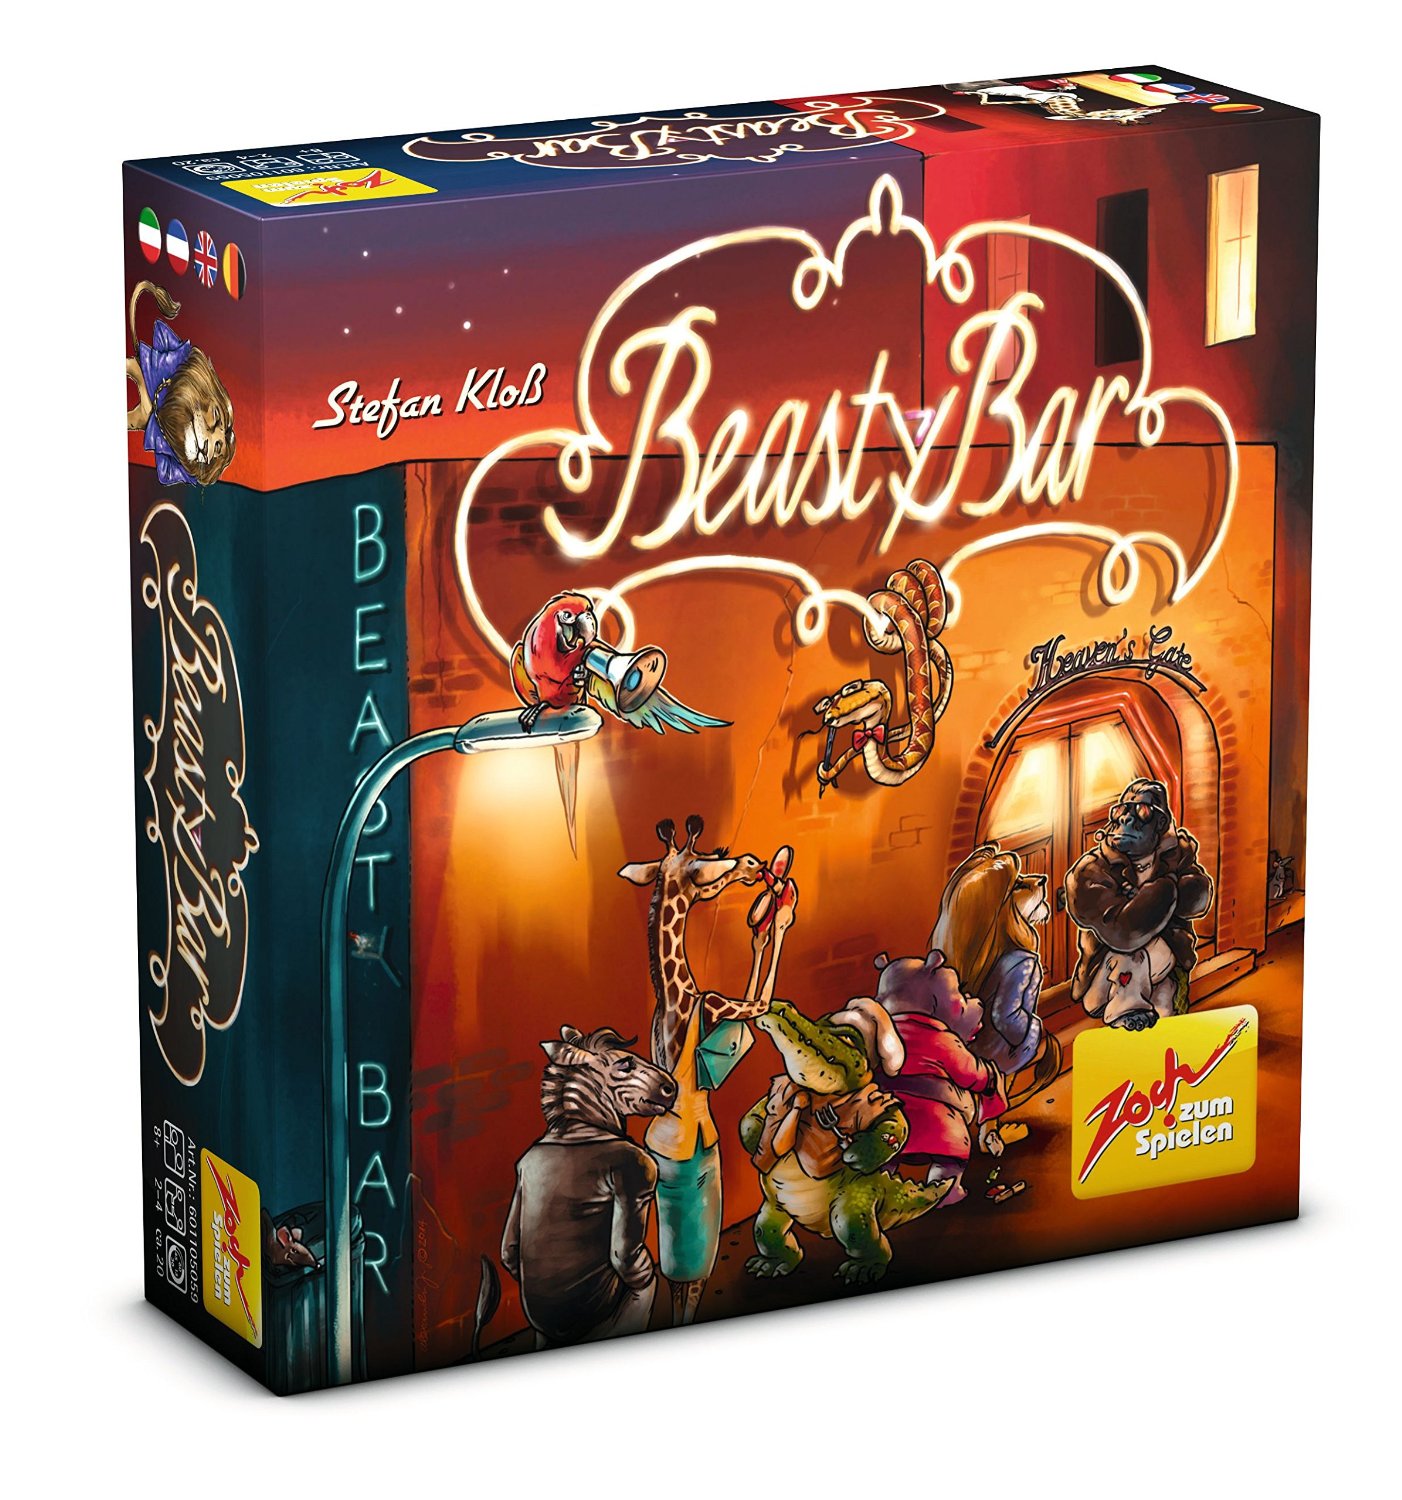 Beasty Bar - Kartenspiel, rgerspiel von Stefan Klo